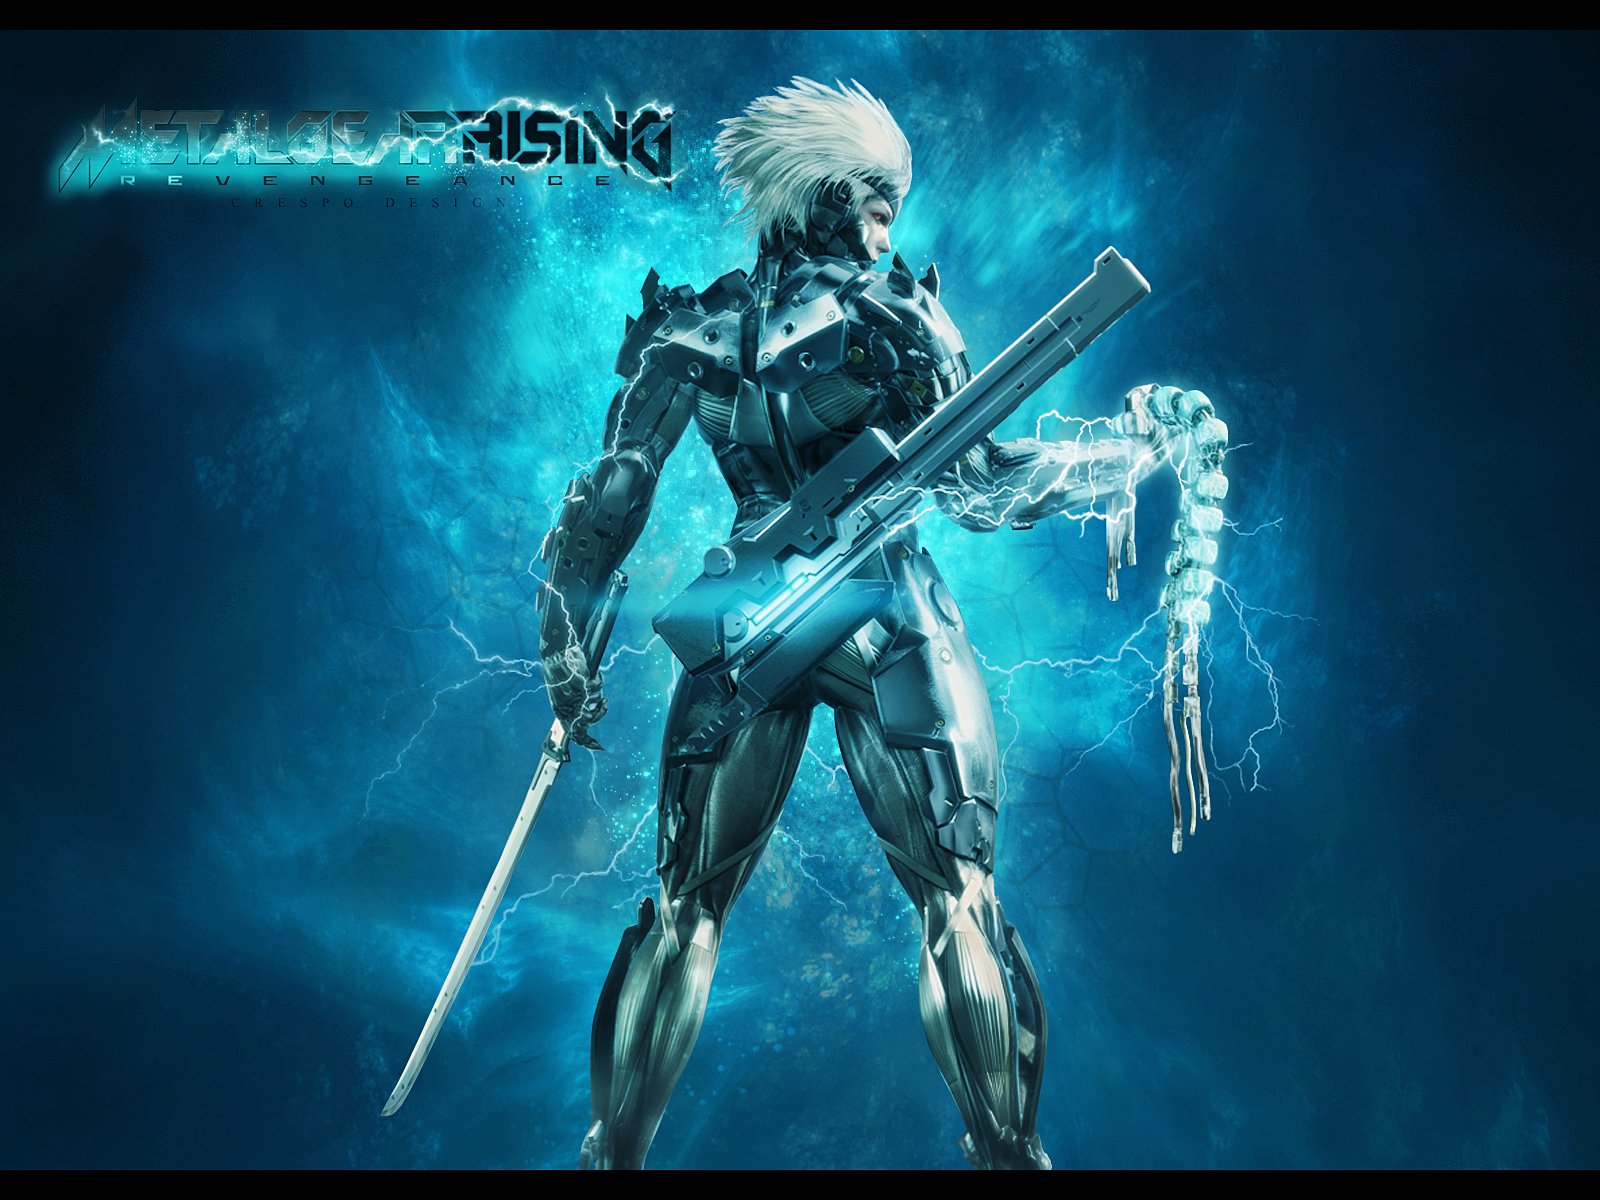 metal, Gear, Rising, Revengeance, Fighting, Cyborg, Robot, Warrior, Sci fi, 1mgrr, Action, Futuristic, Sword, Poster Wallpaper